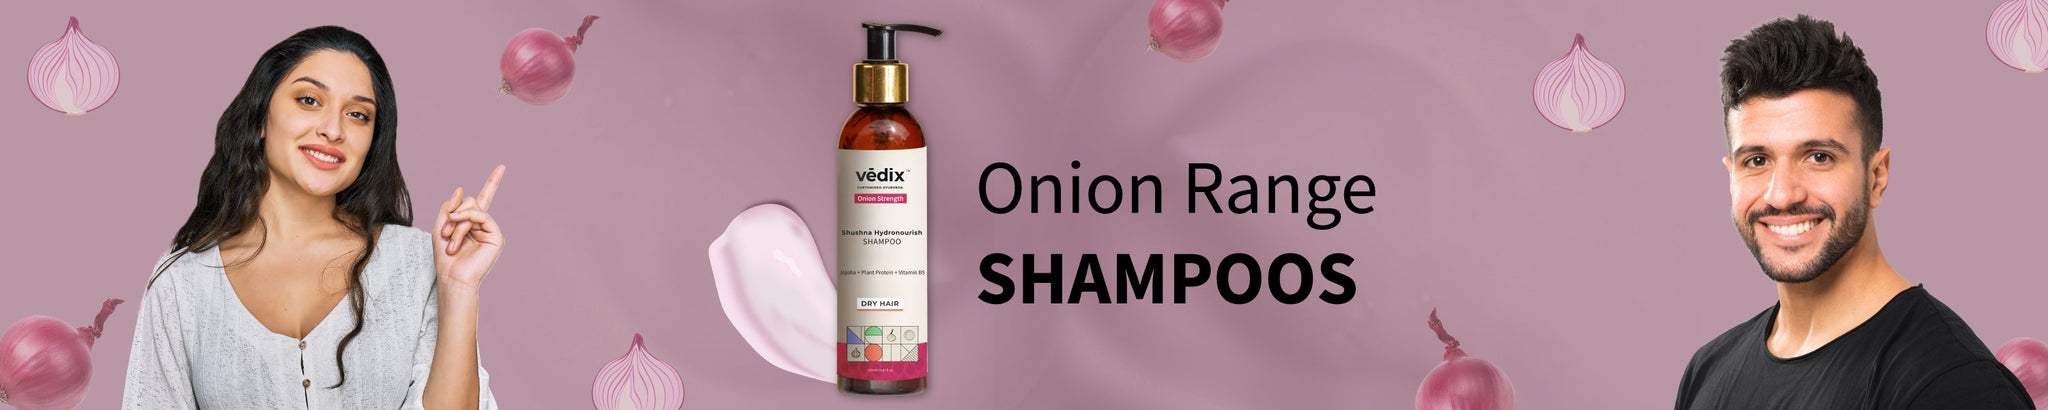 Onion Range - Hair Shampoo